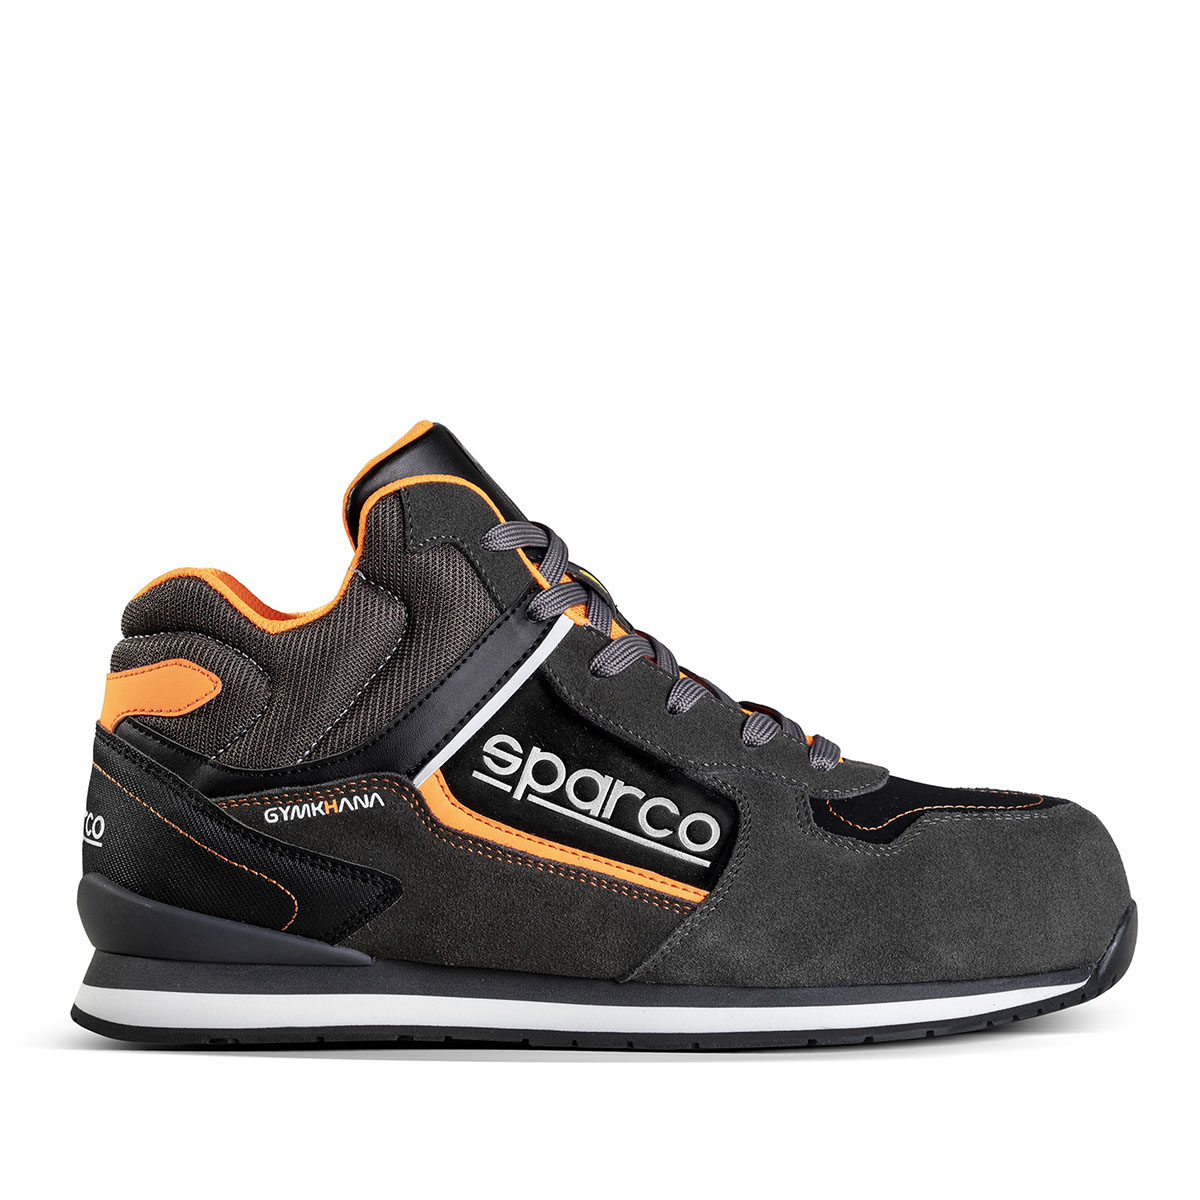 Zapato seguridad SPARCO SPORT SE1 S3 SRC - Uniformes granollers